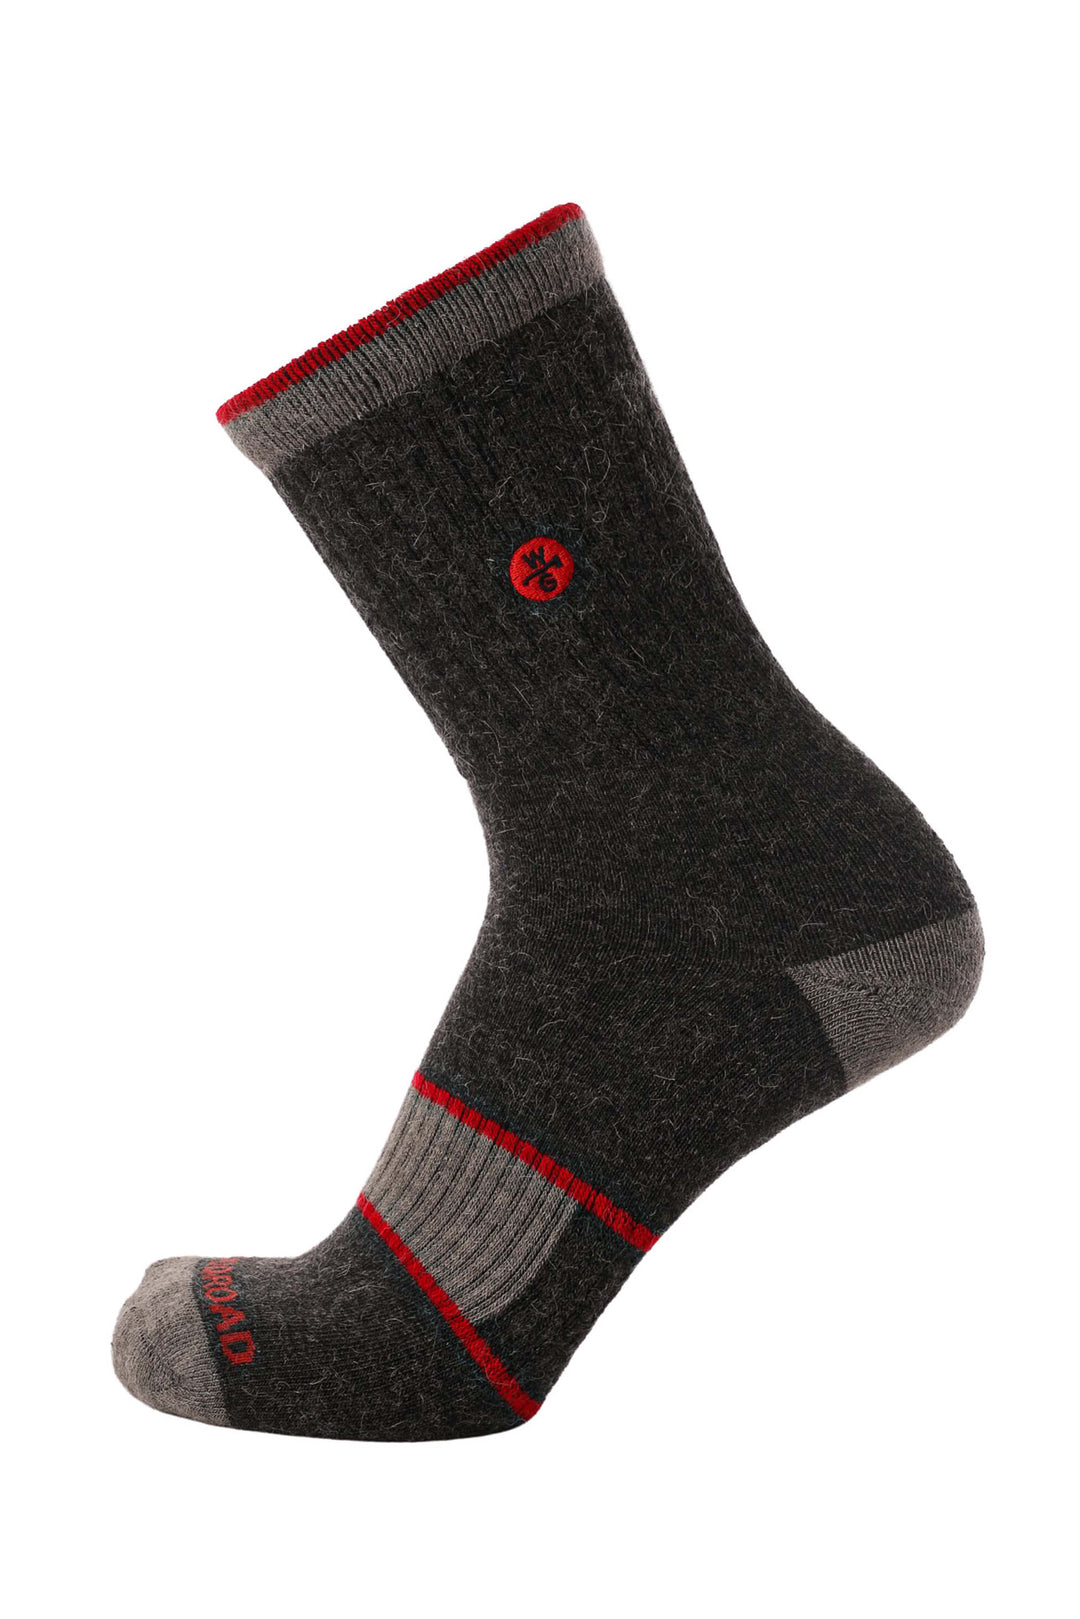 Nada Llama Crew Socks - Alpaca Wool Socks - Grey - Woodroad Gear Co.